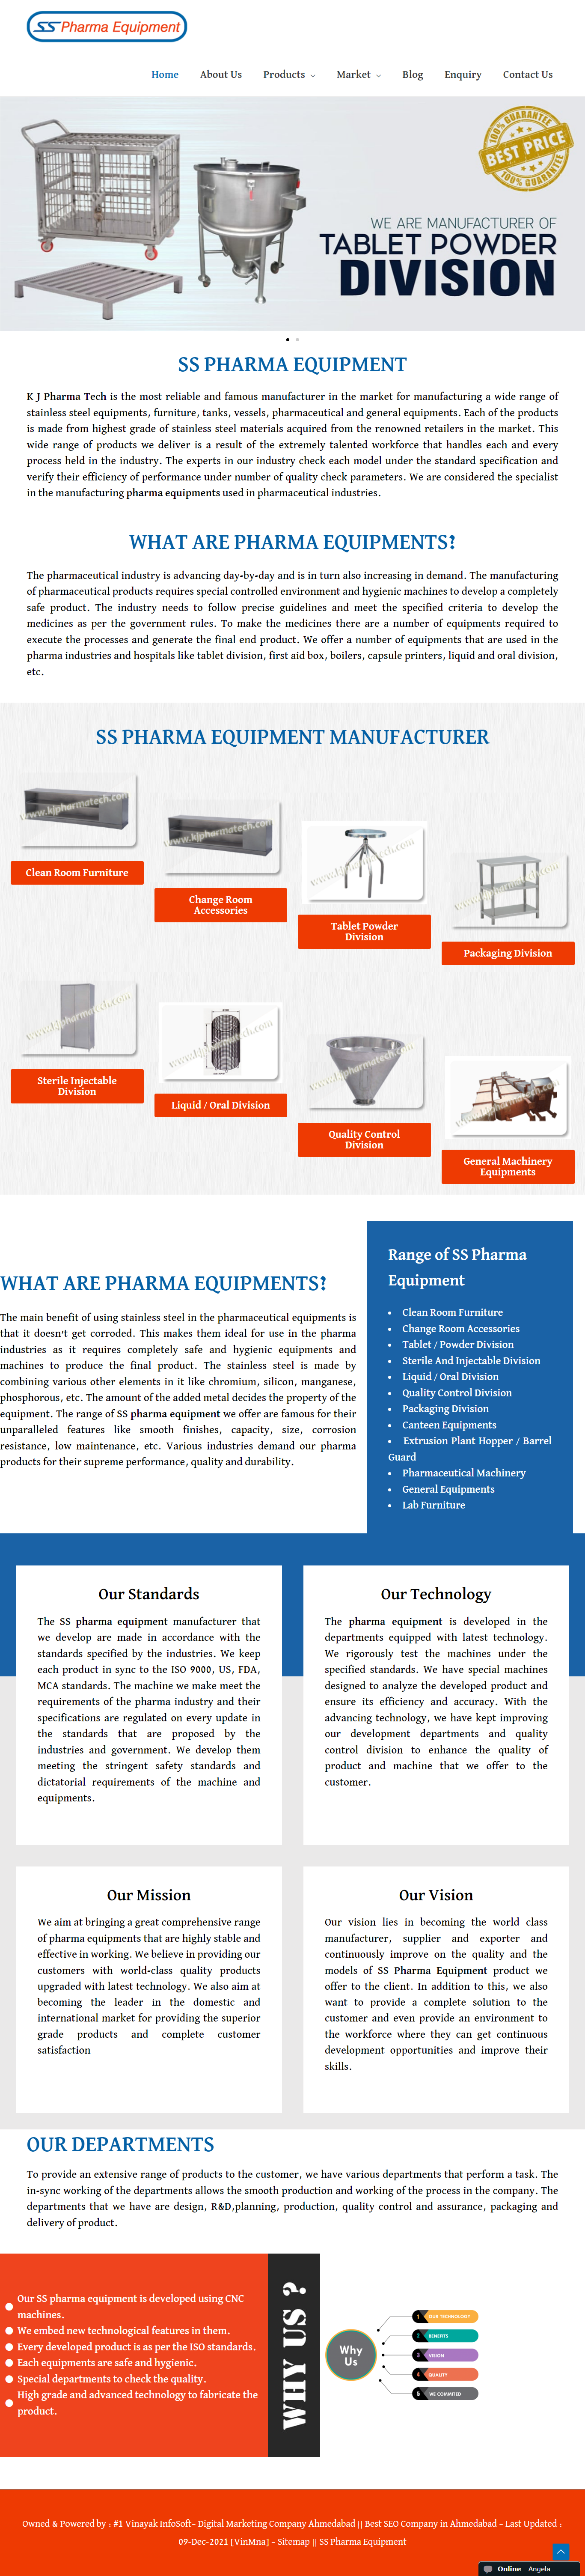 SS Pharma Equipment